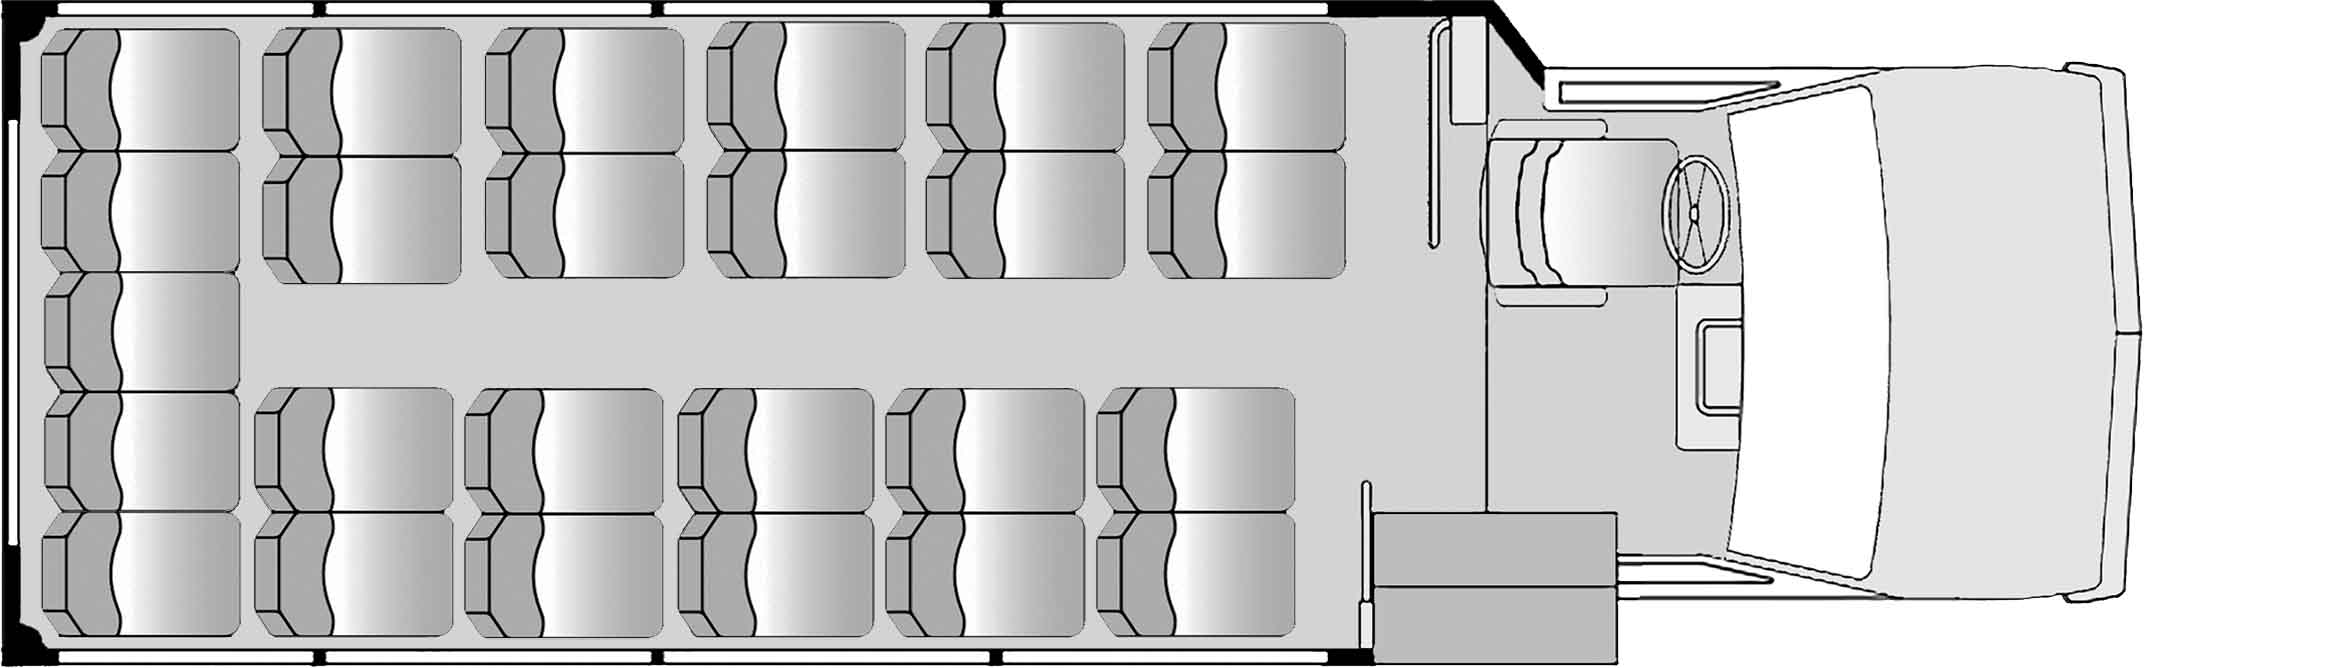 25 Passenger Plus Driver Floorplan Image